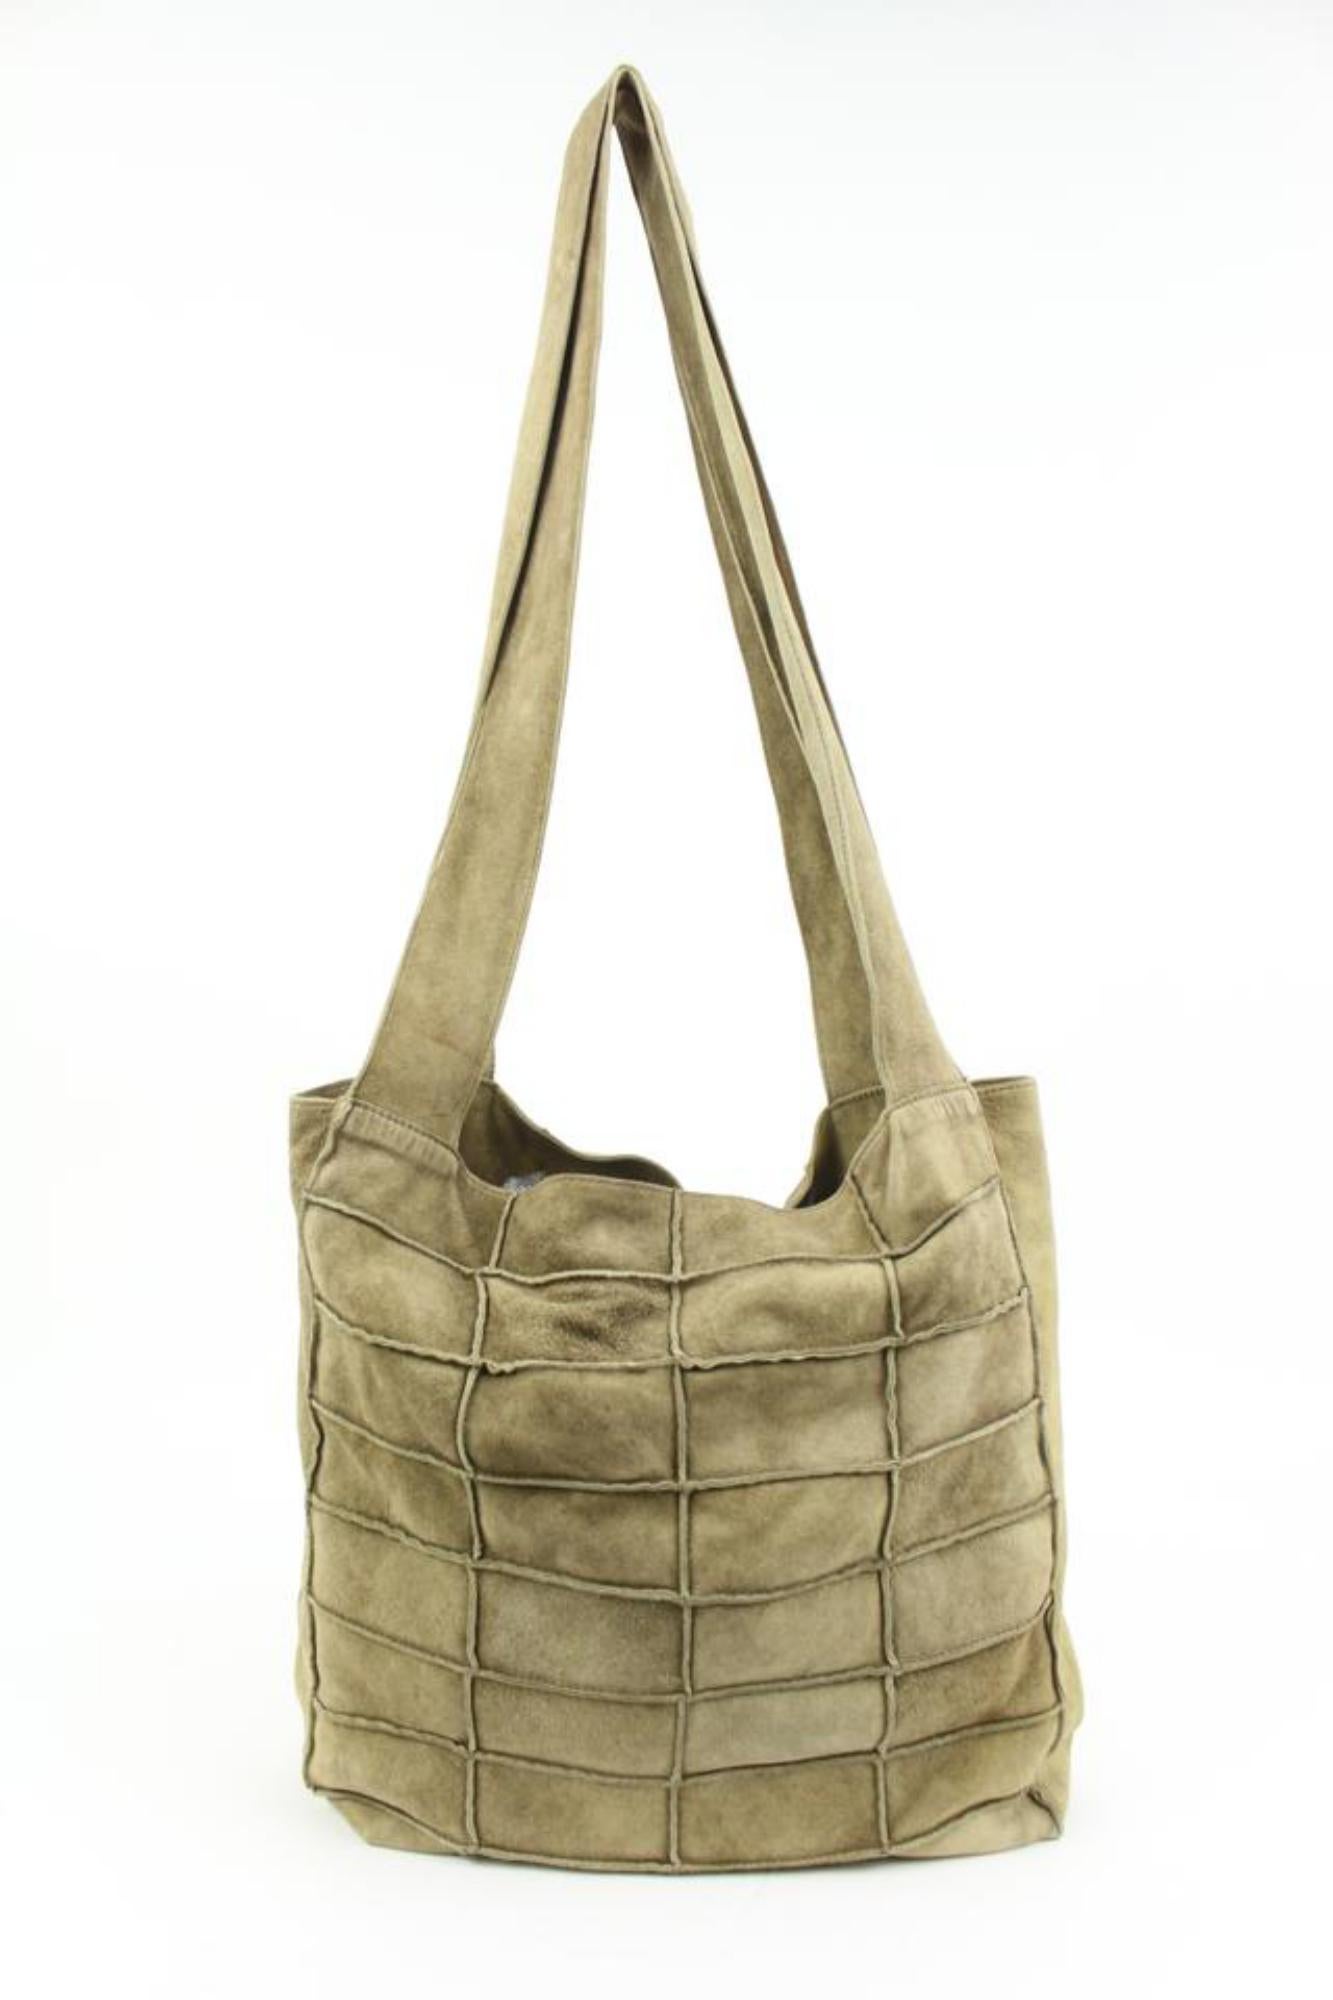 Chanel Light Brown Suede Patchwork Messenger Shopper Bag 87cz418s For Sale 4